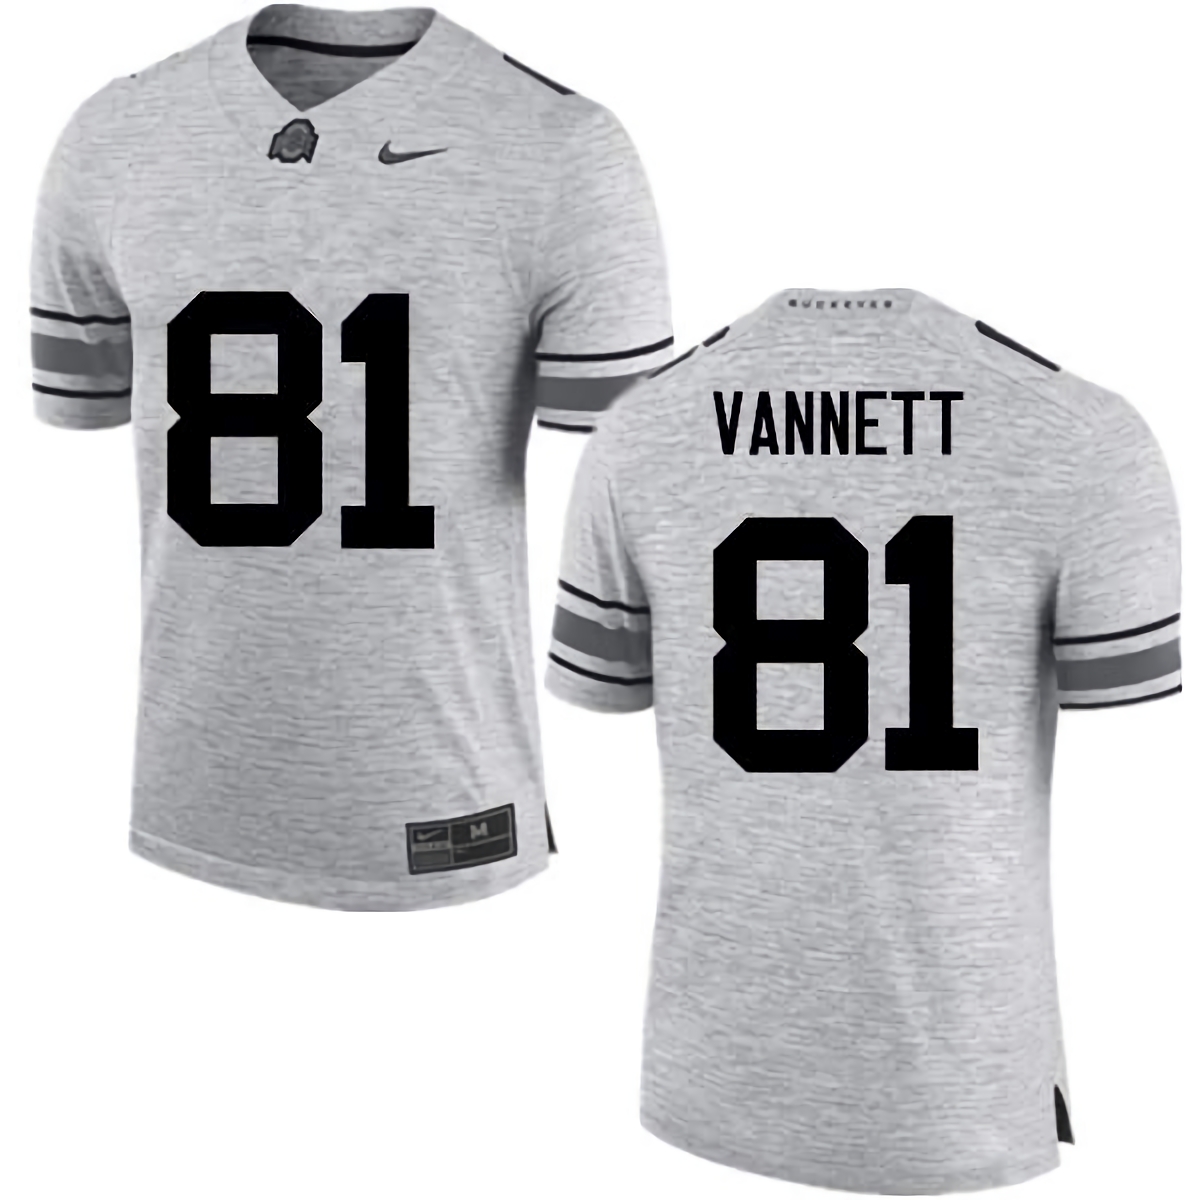 Nick Vannett Ohio State Buckeyes Men's NCAA #81 Nike Gray College Stitched Football Jersey XOJ6556GY